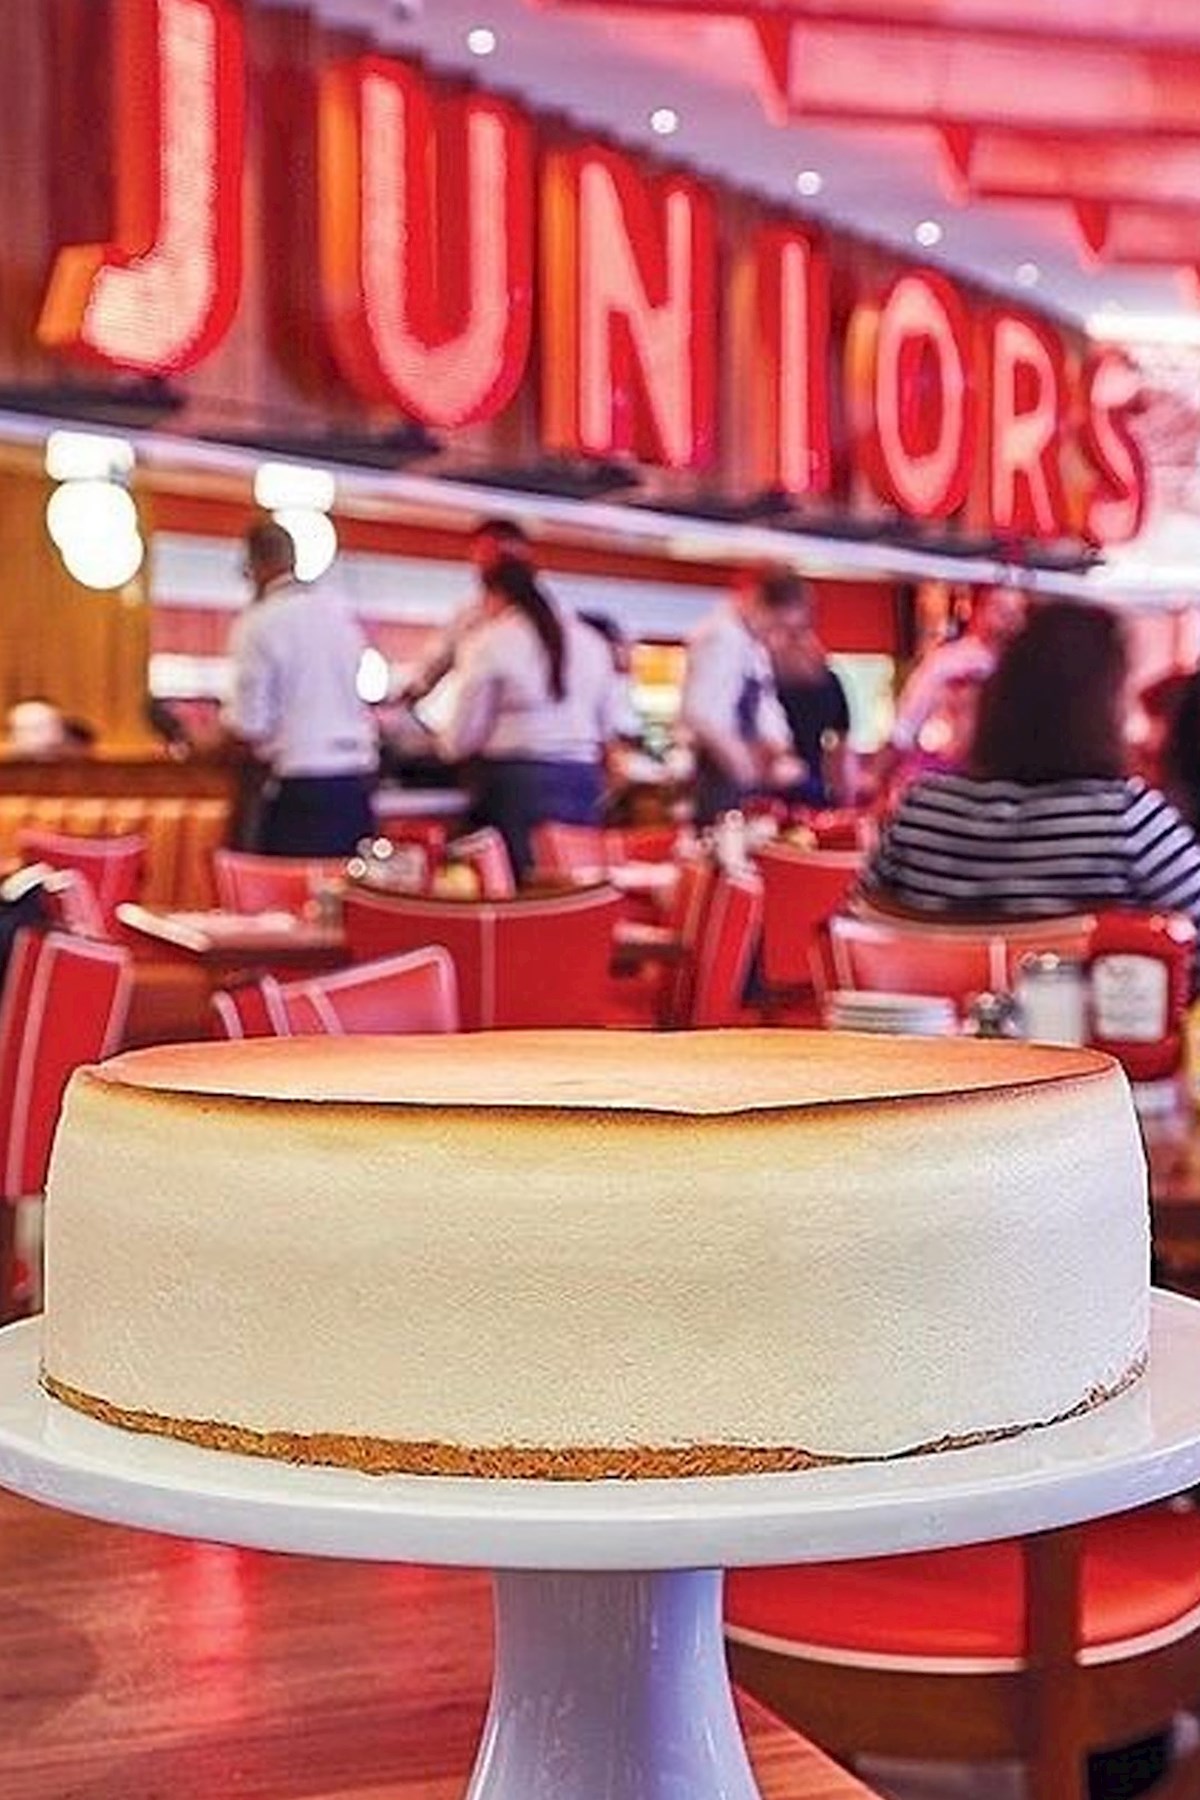 Original Junior's cheesecake